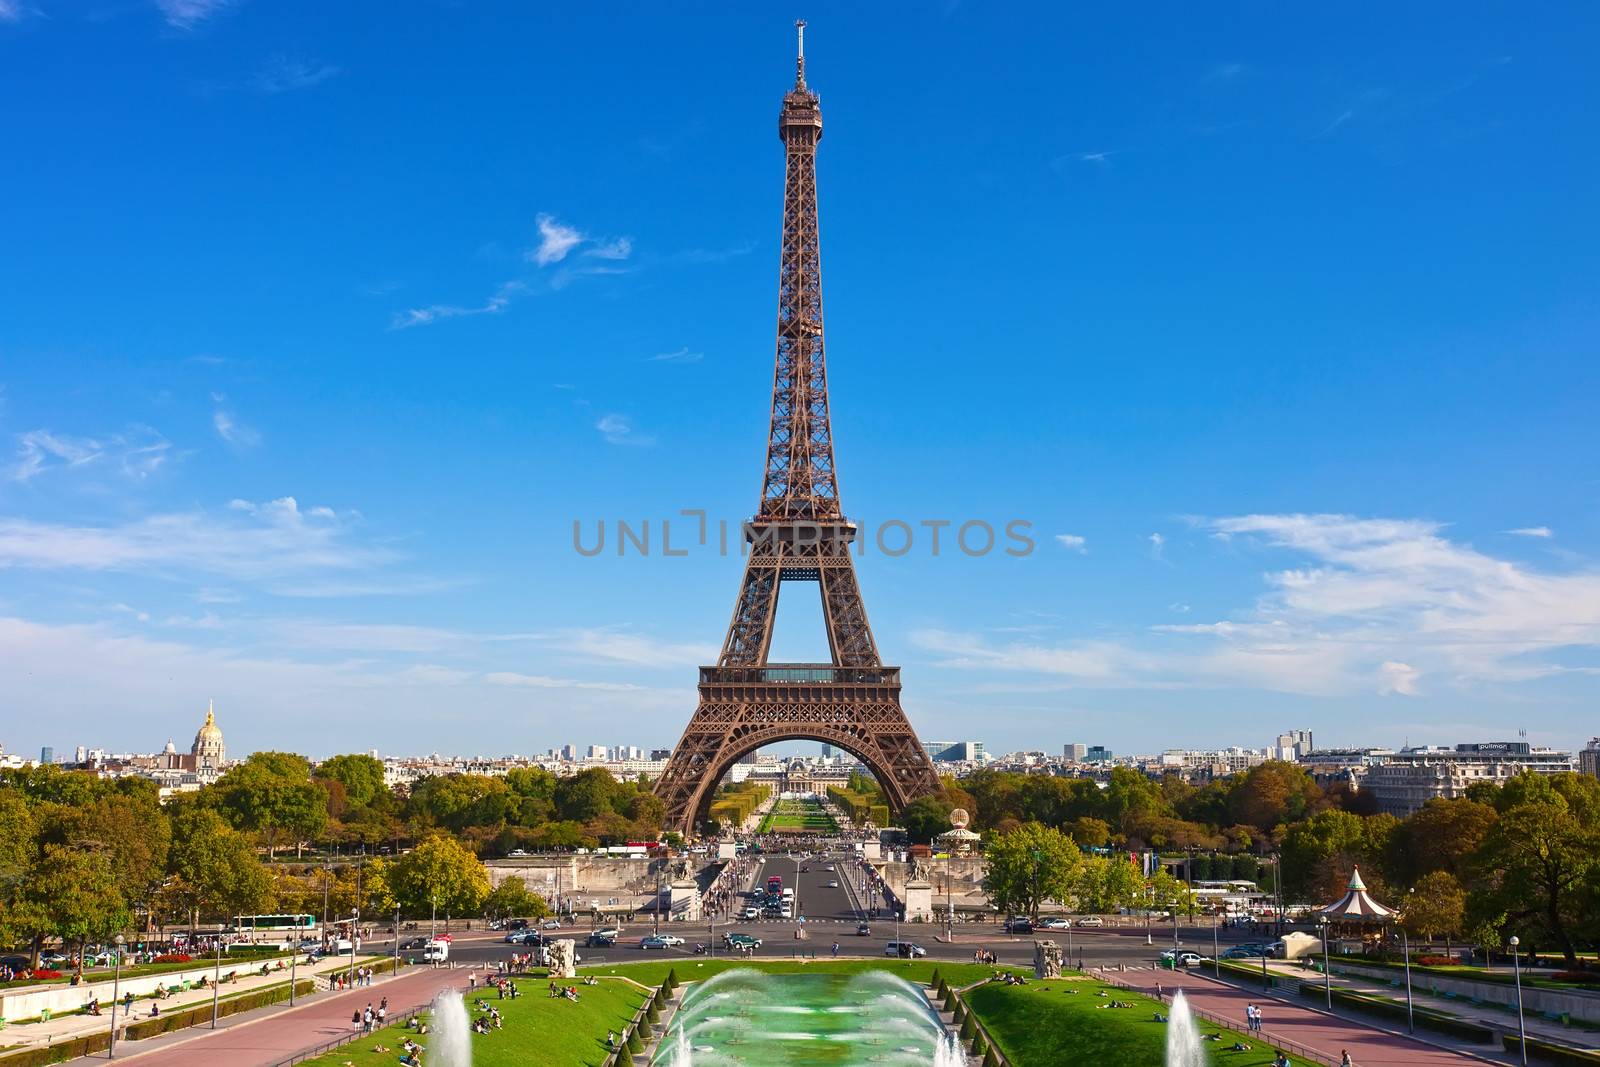 Eiffel Tower in Paris by sailorr